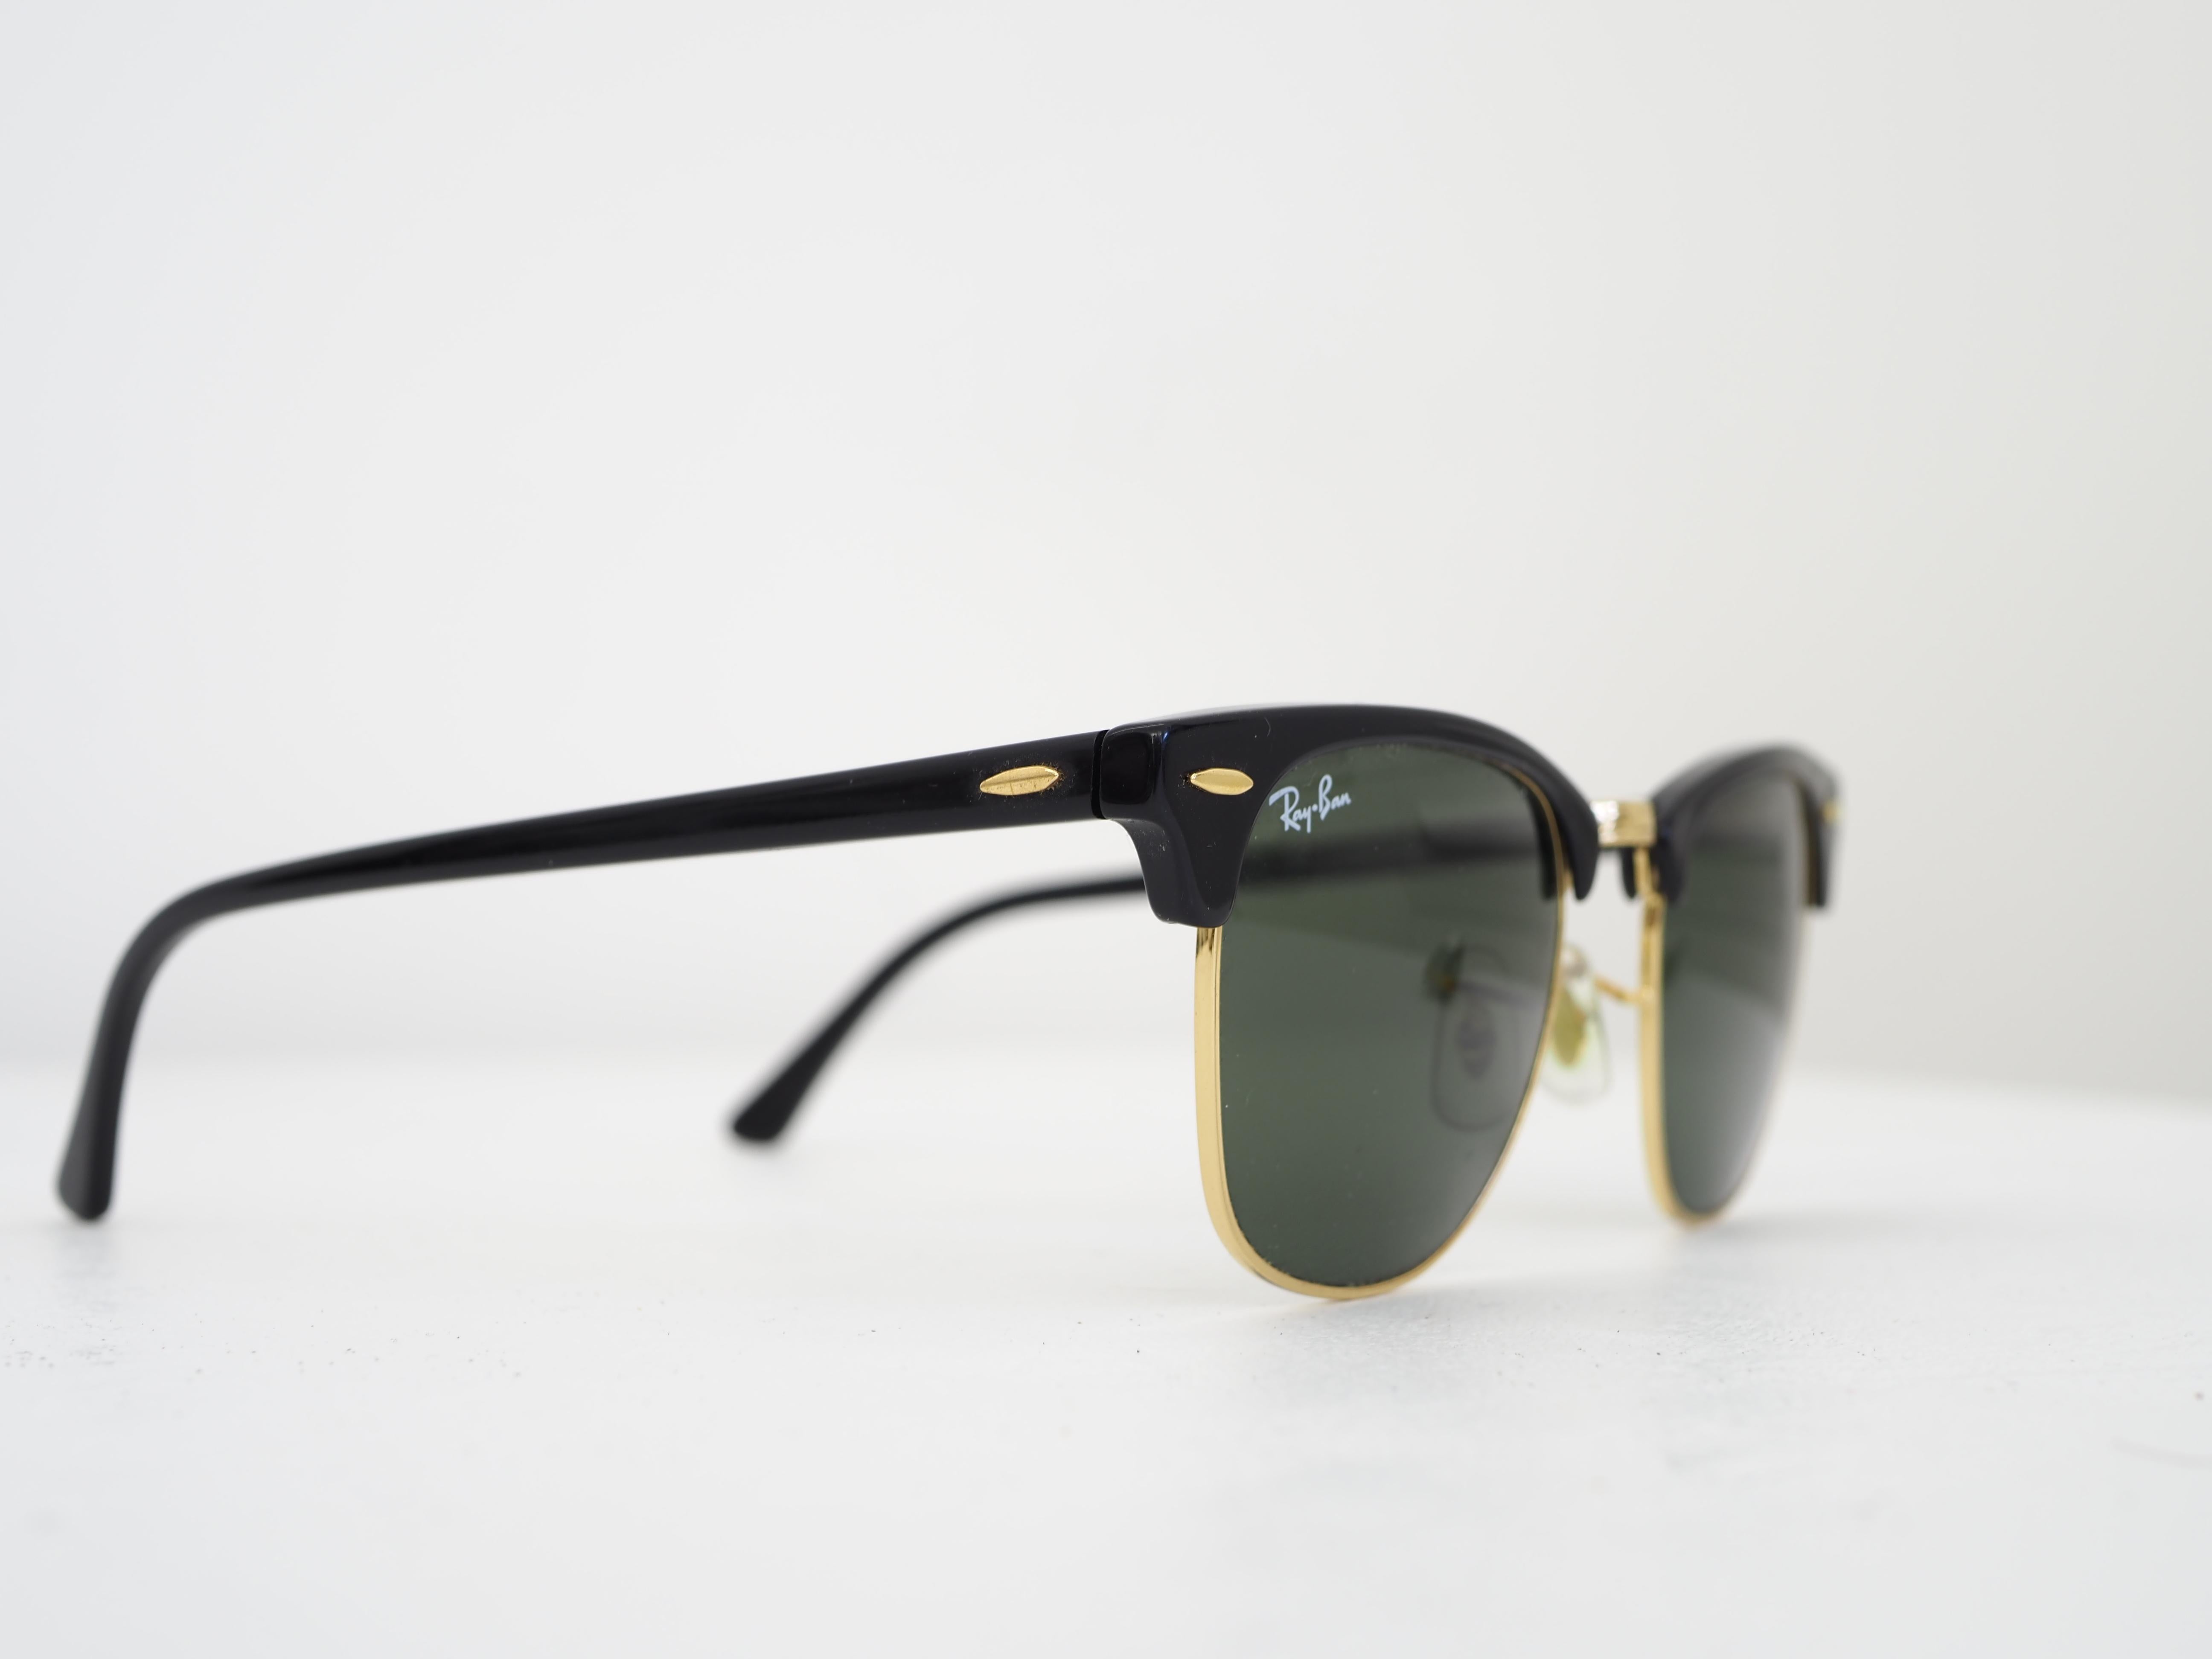 Ray-Ban black gold sunglasses In Good Condition For Sale In Capri, IT